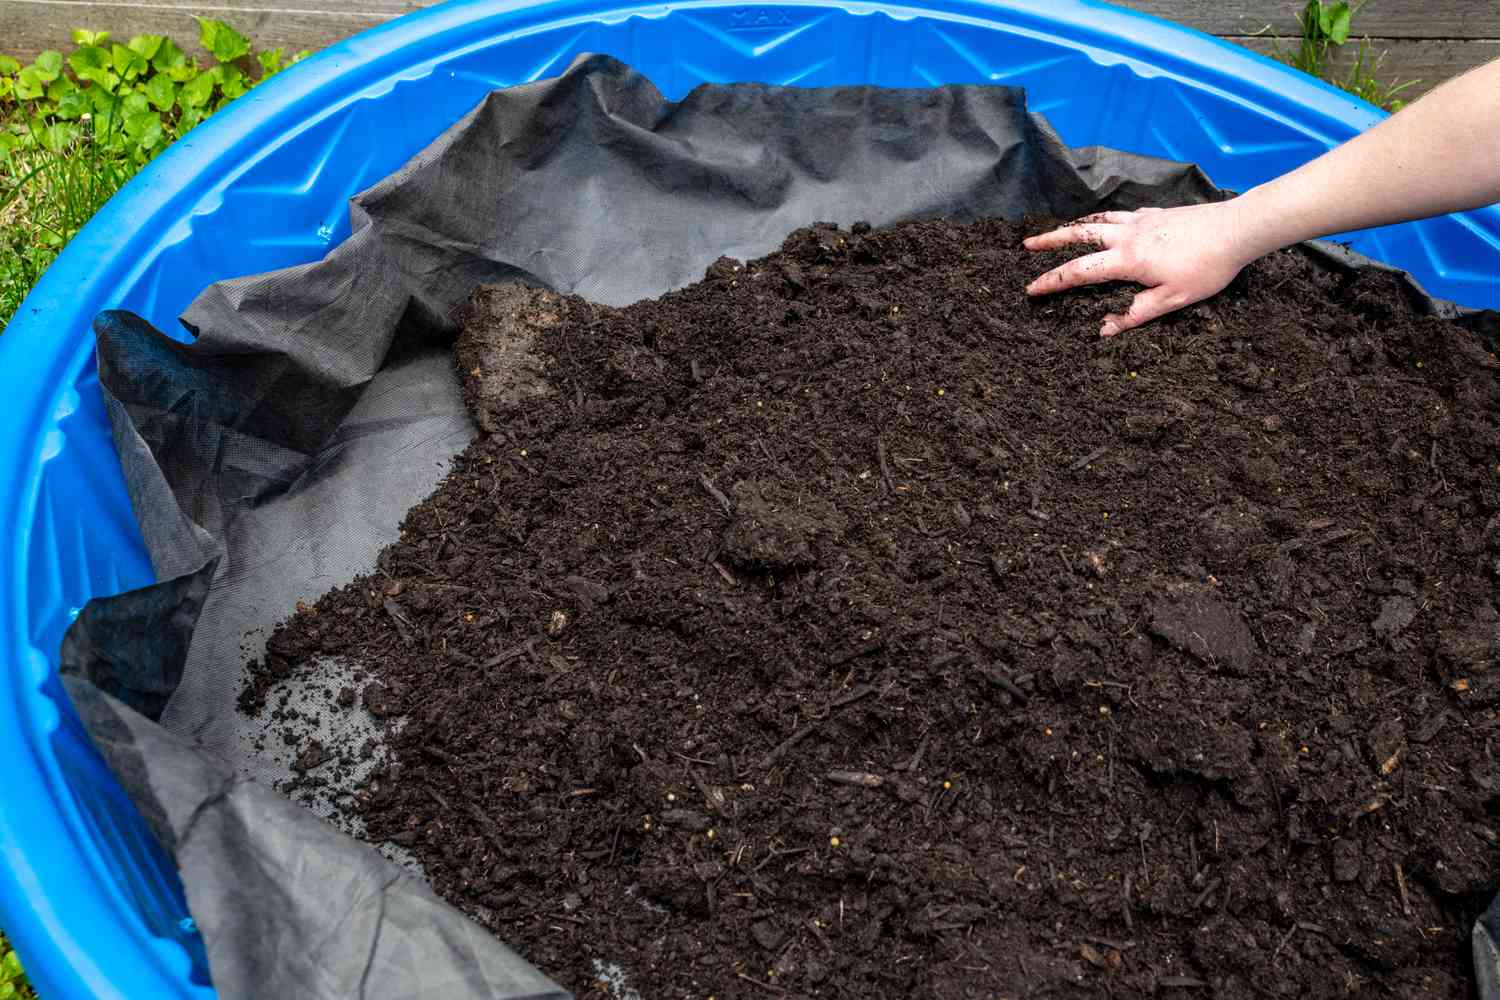 General-purpose potting soil added to kiddie pool 